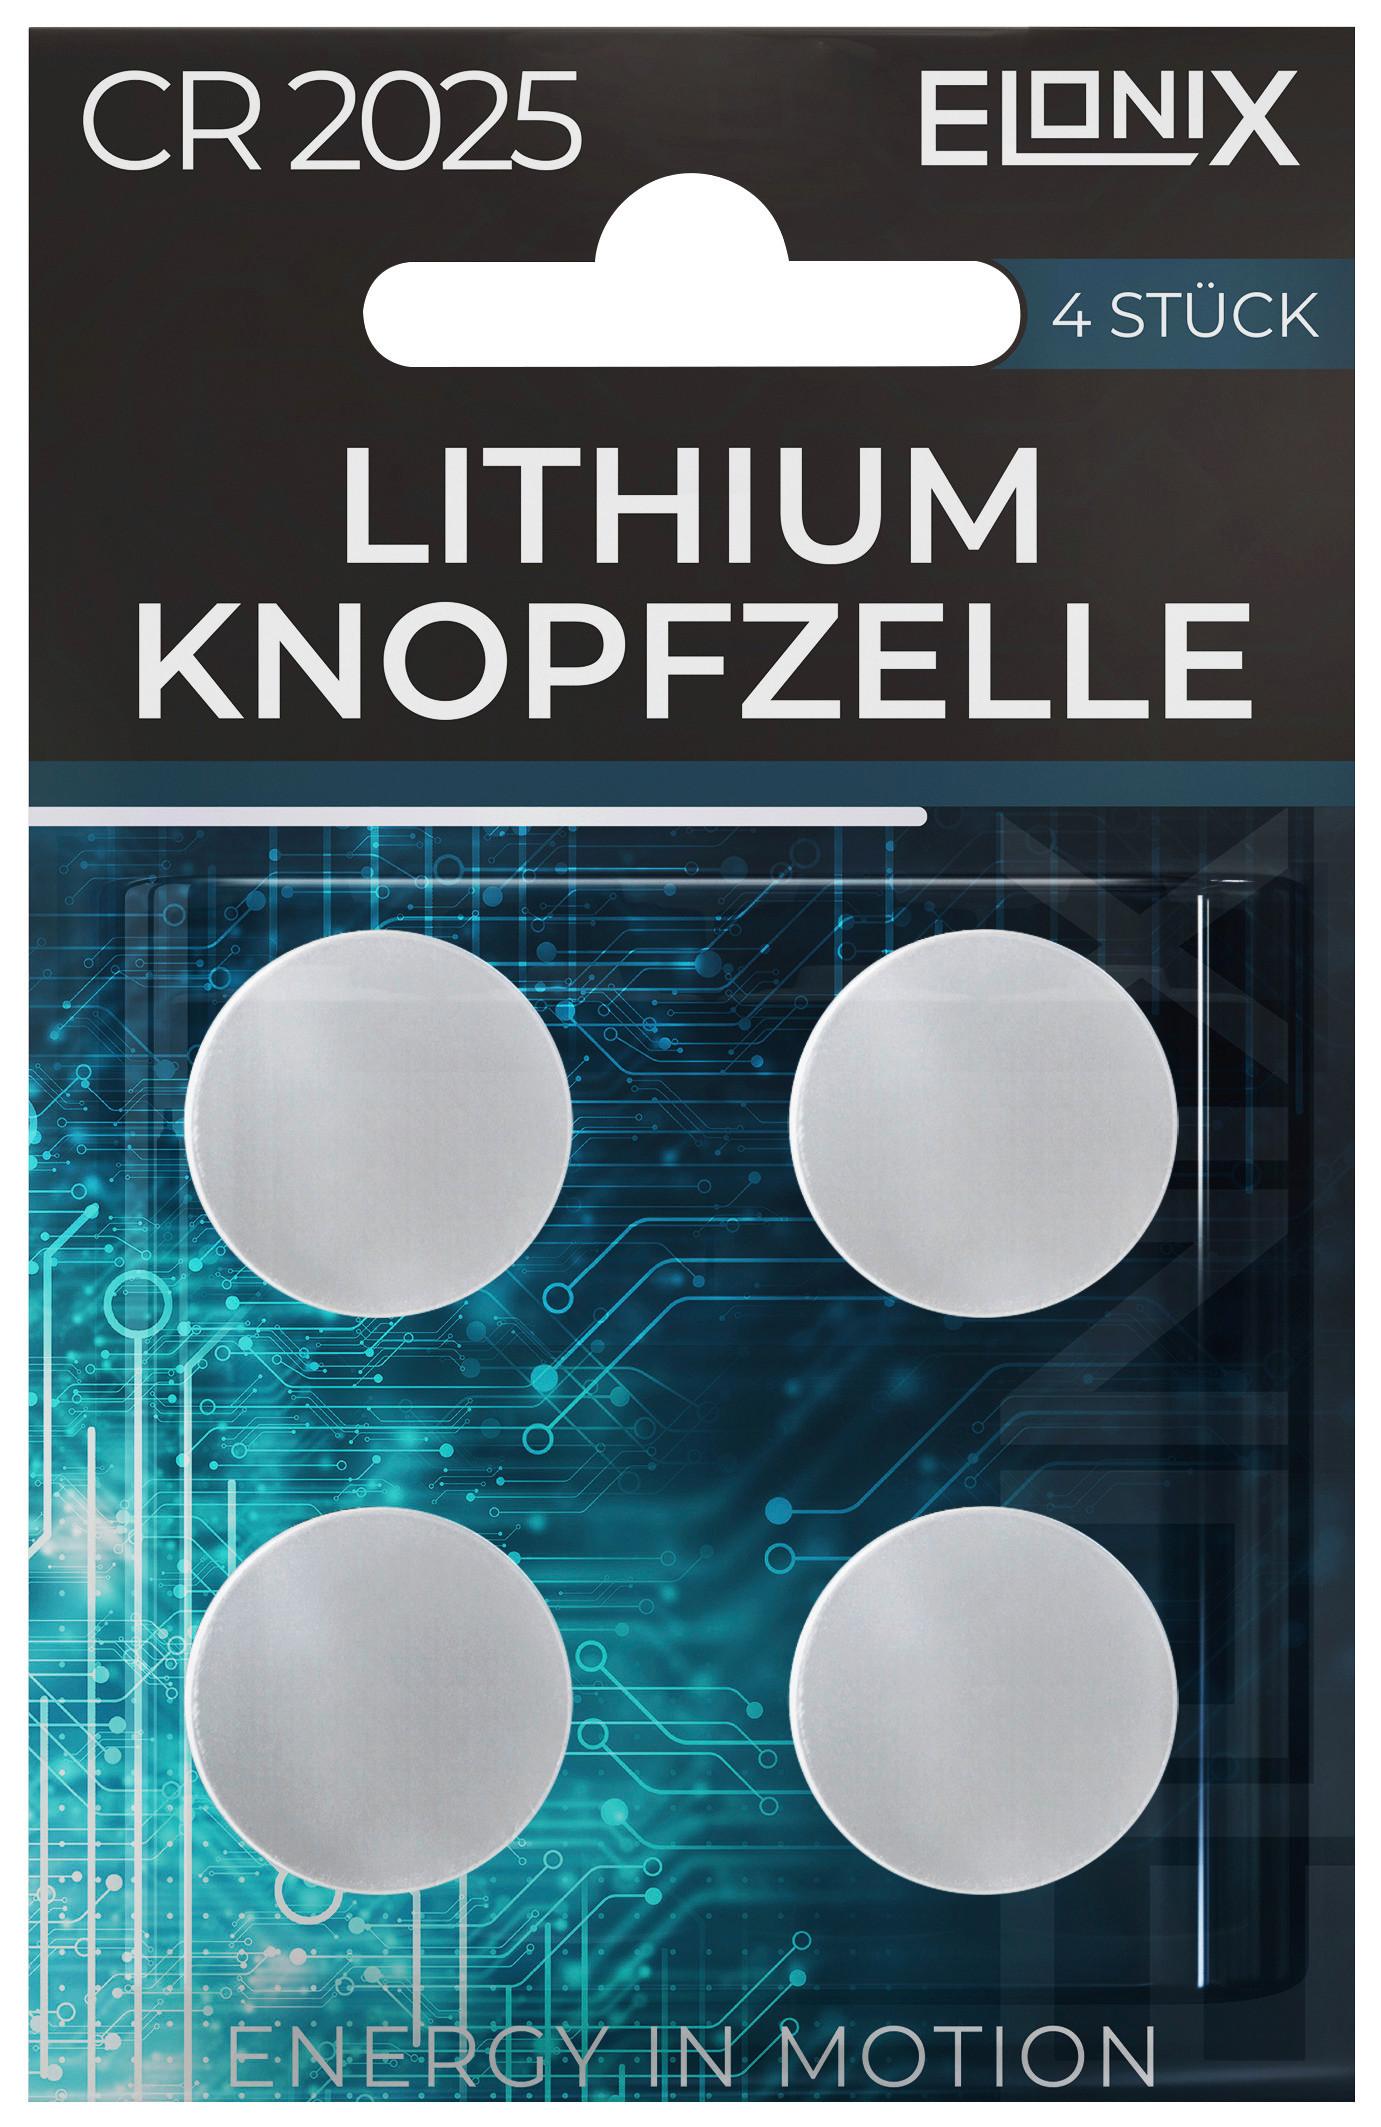 Baterie Lithium Cr2025, Ks/bal. - barvy stříbra, Basics (2/0,25cm)